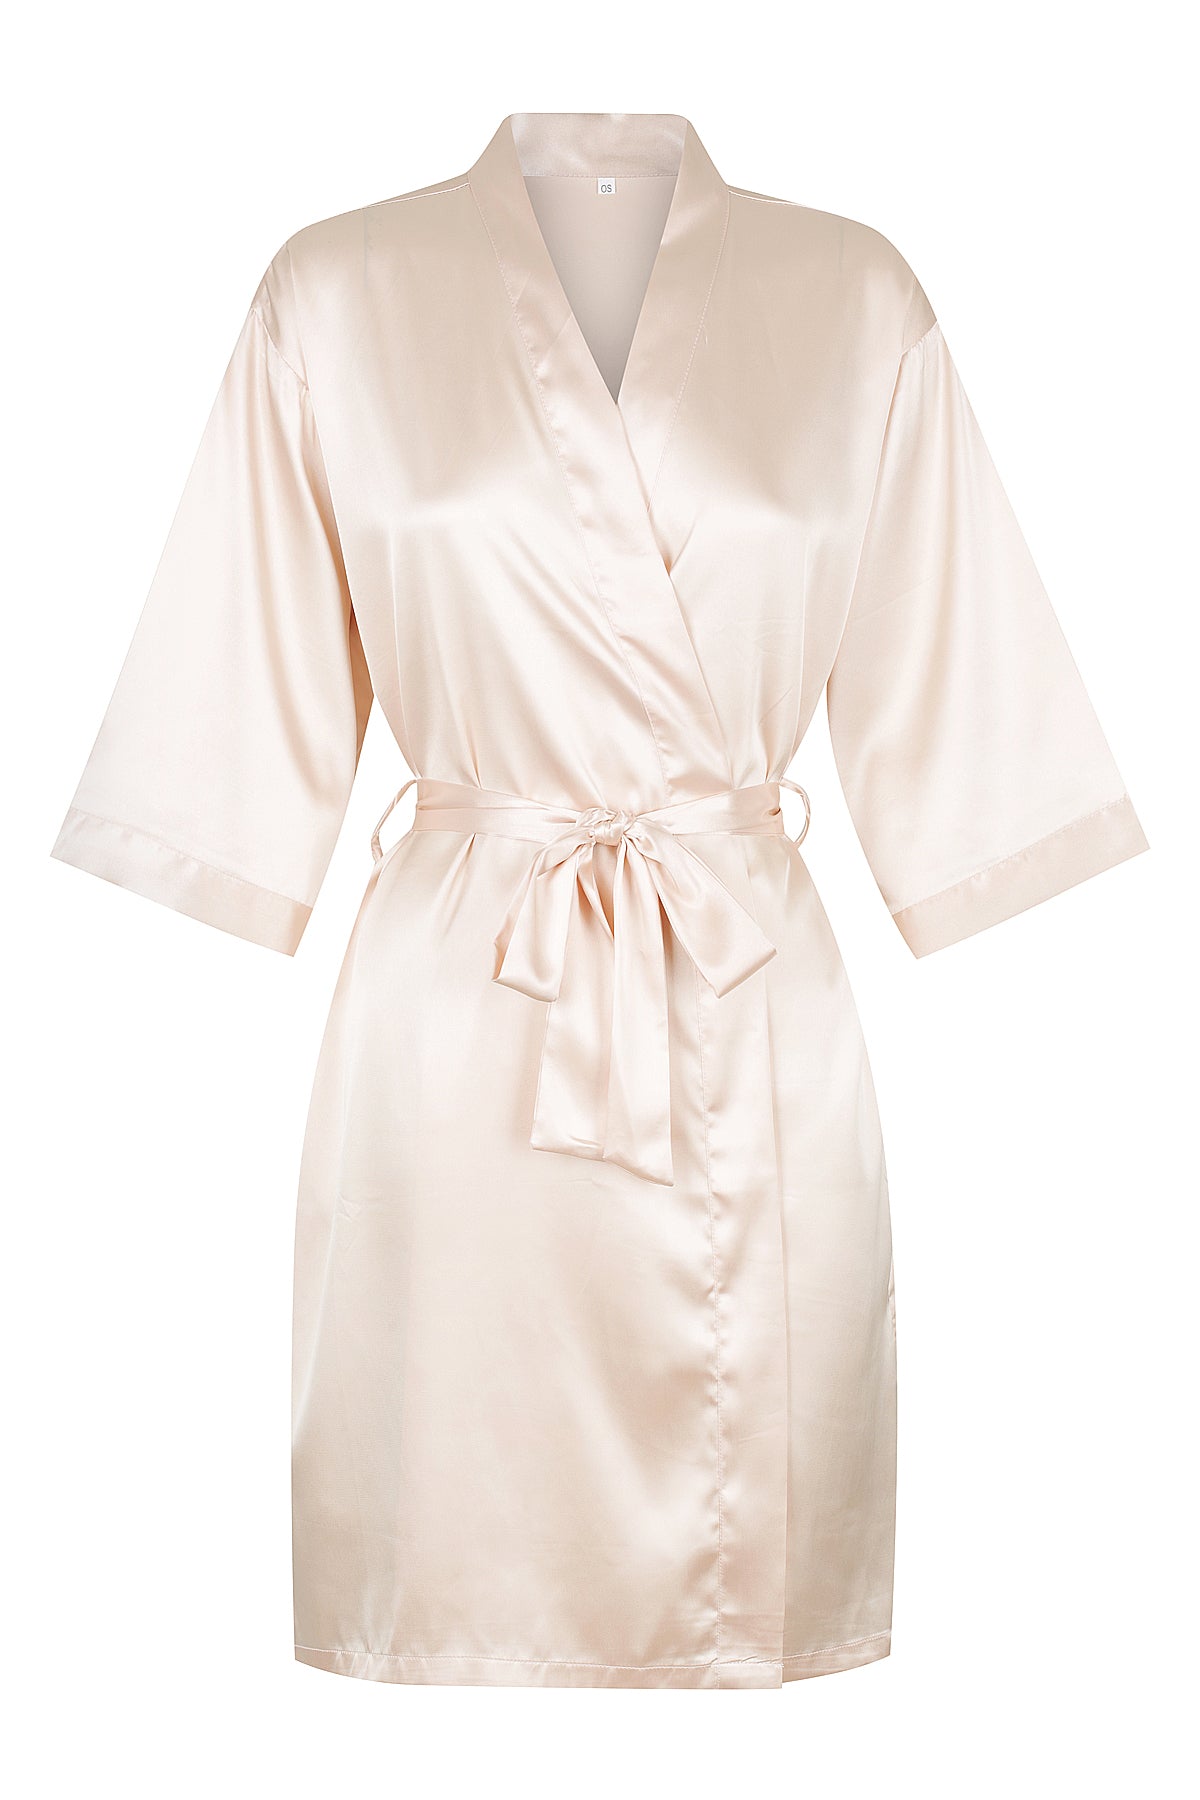 Satin Bridesmaid Robes | Satin Robes - Australia | Bridal Party Robe ...